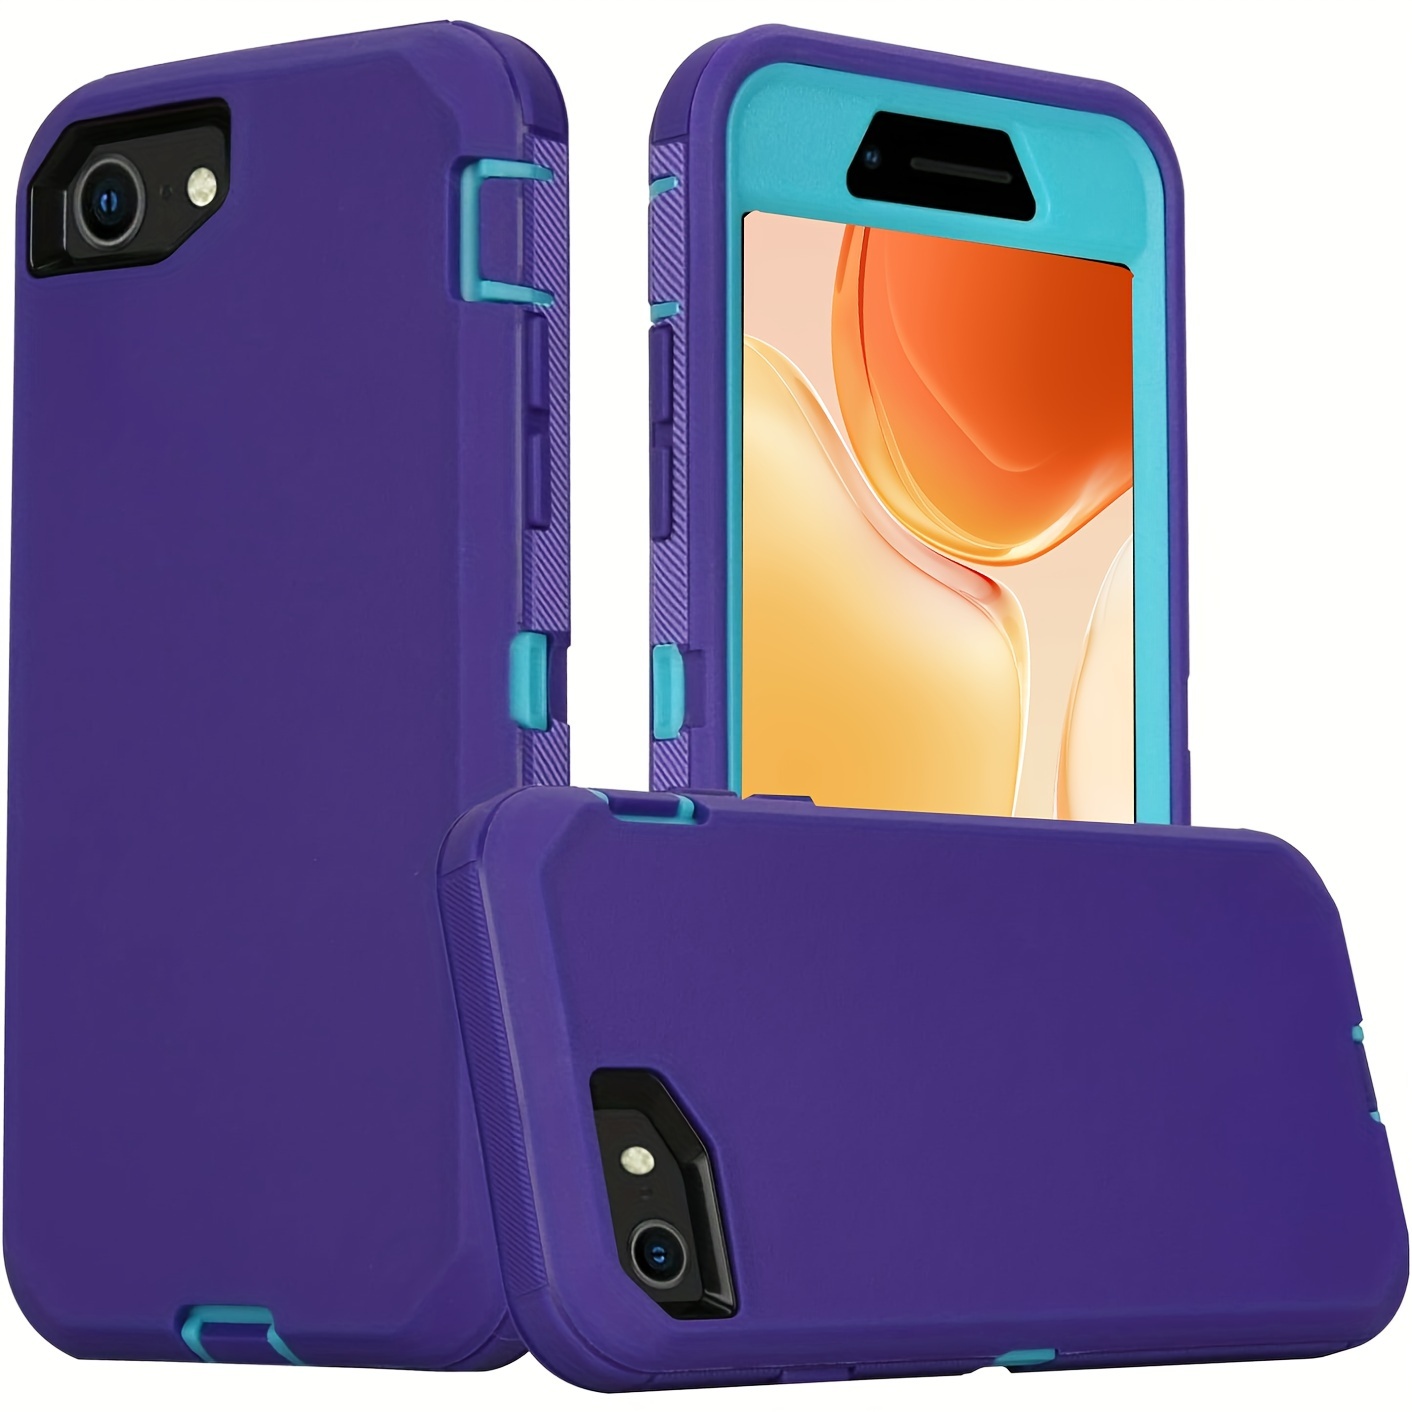 SuperSkin para iPhone iPhone 8/7 / SE - Estuche protector